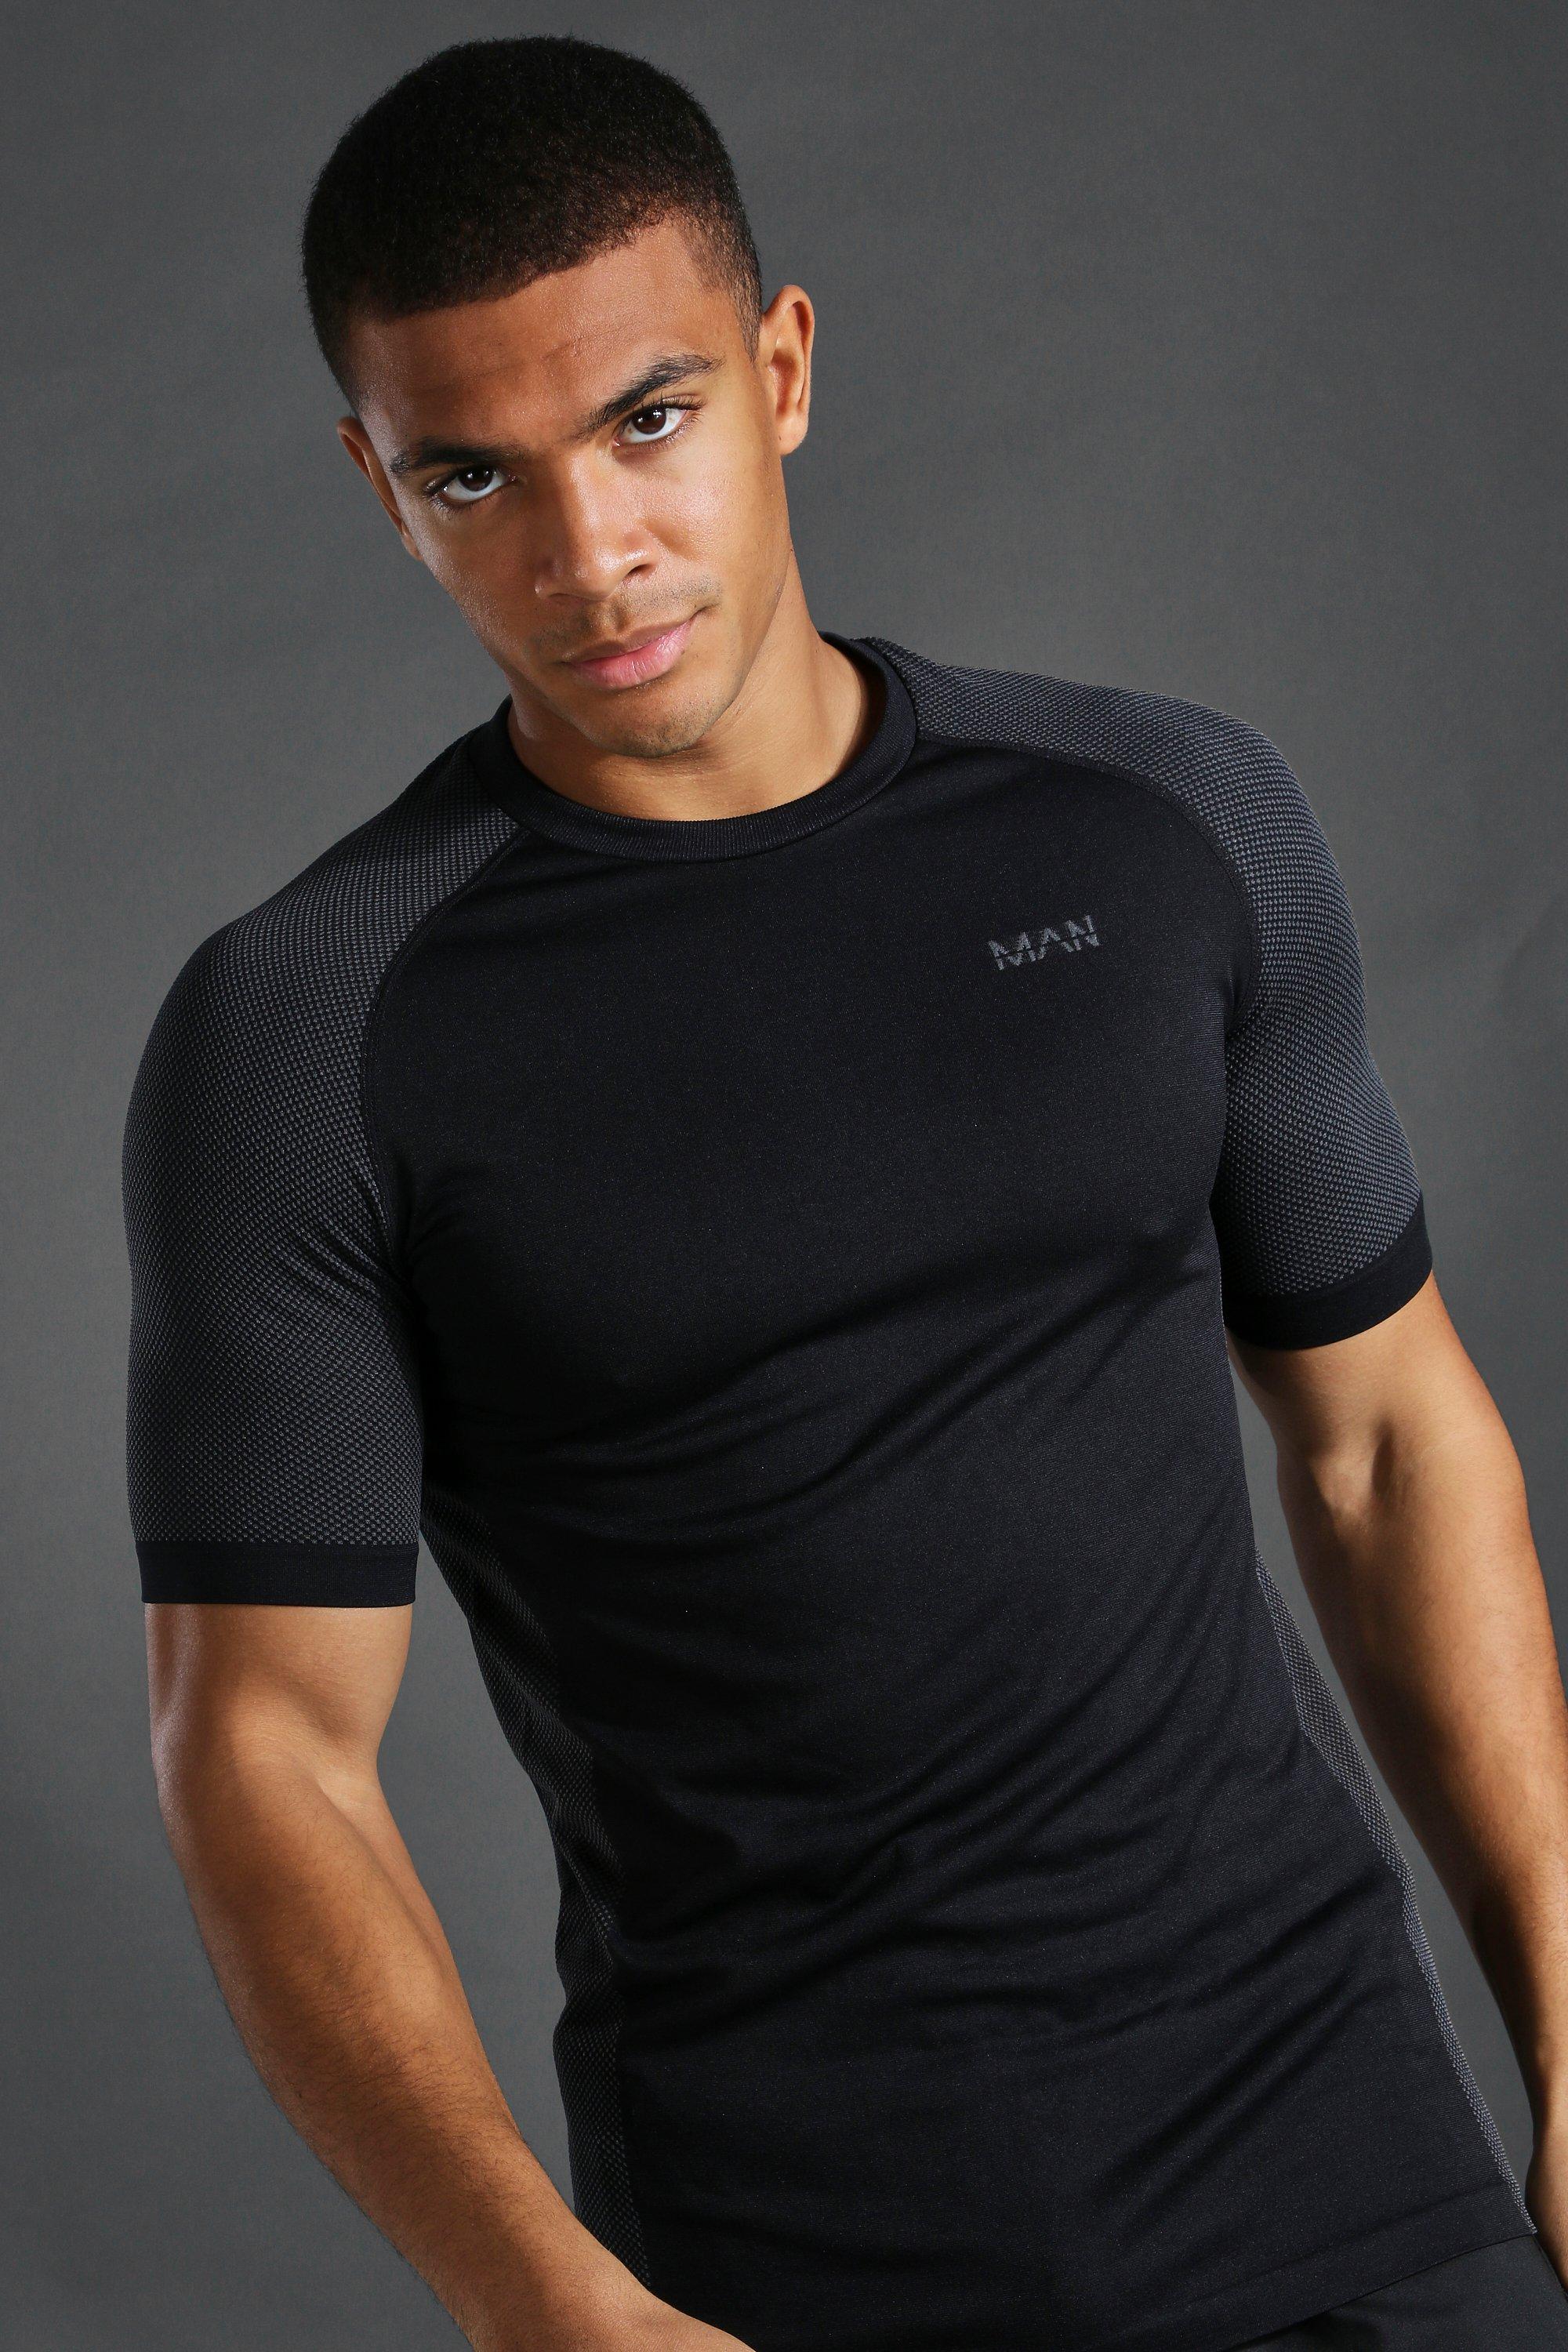 https://media.boohoo.com/i/boohoo/mzz03637_black_xl_3/male-black-man-active-gym-muscle-fit-t-shirt